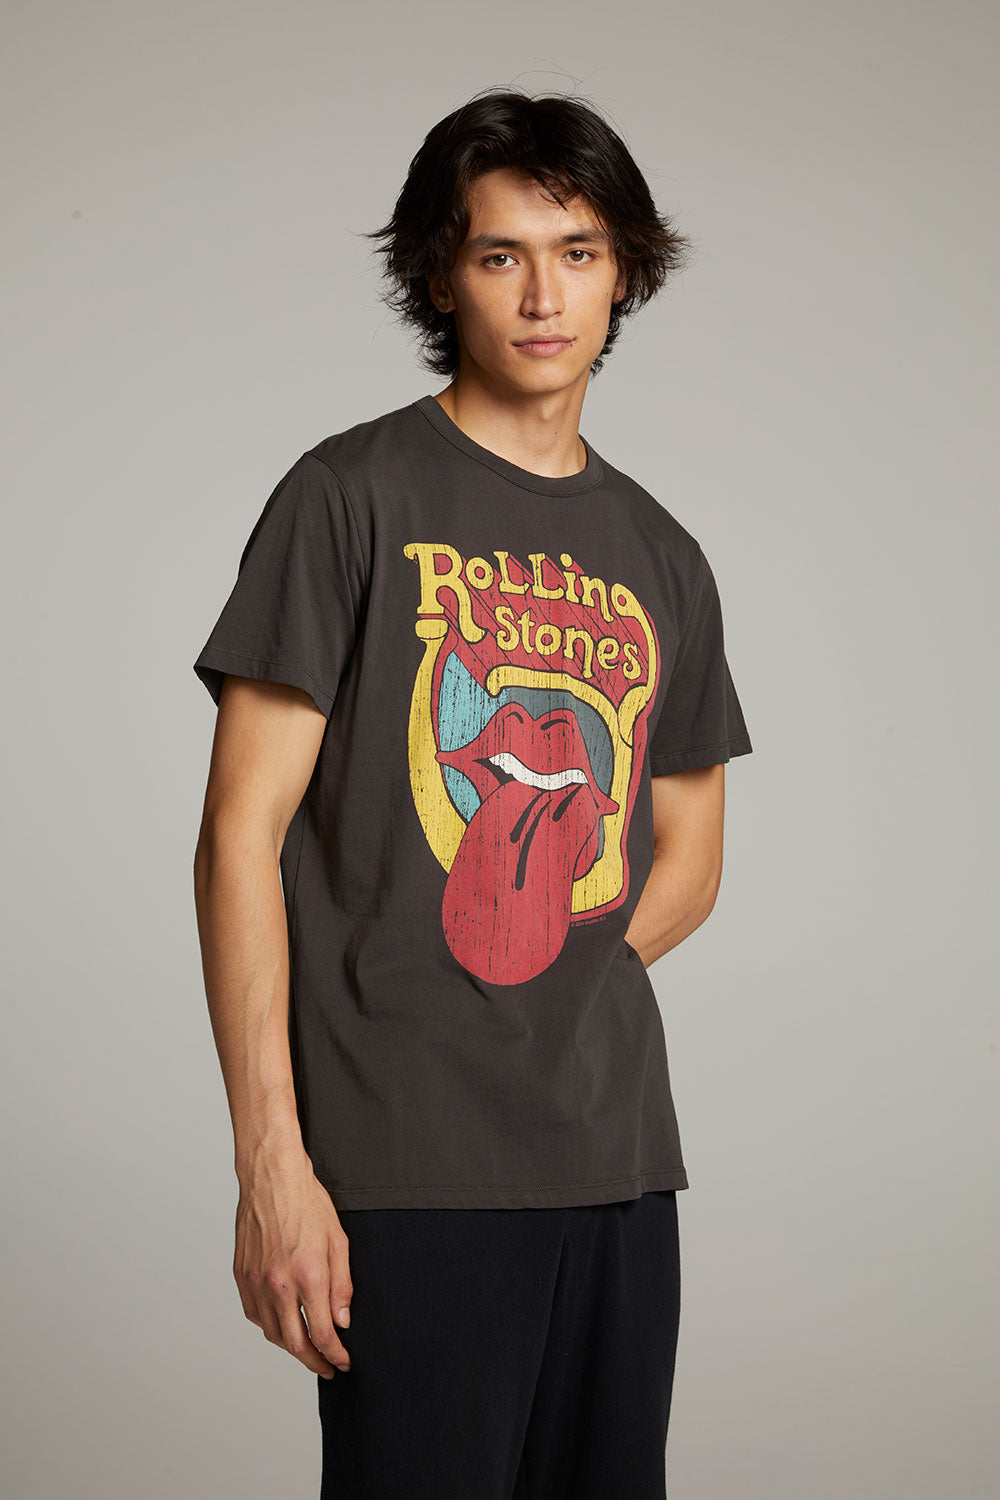 Rolling Stones Retro Logo Crew Neck Tee Mens chaserbrand